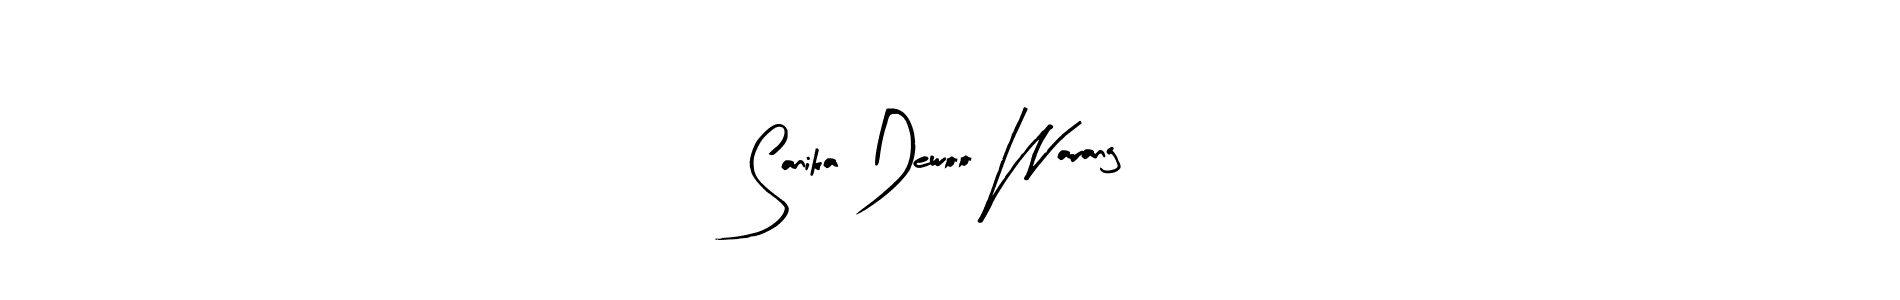 How to Draw Sanika Dewoo Warang signature style? Arty Signature is a latest design signature styles for name Sanika Dewoo Warang. Sanika Dewoo Warang signature style 8 images and pictures png